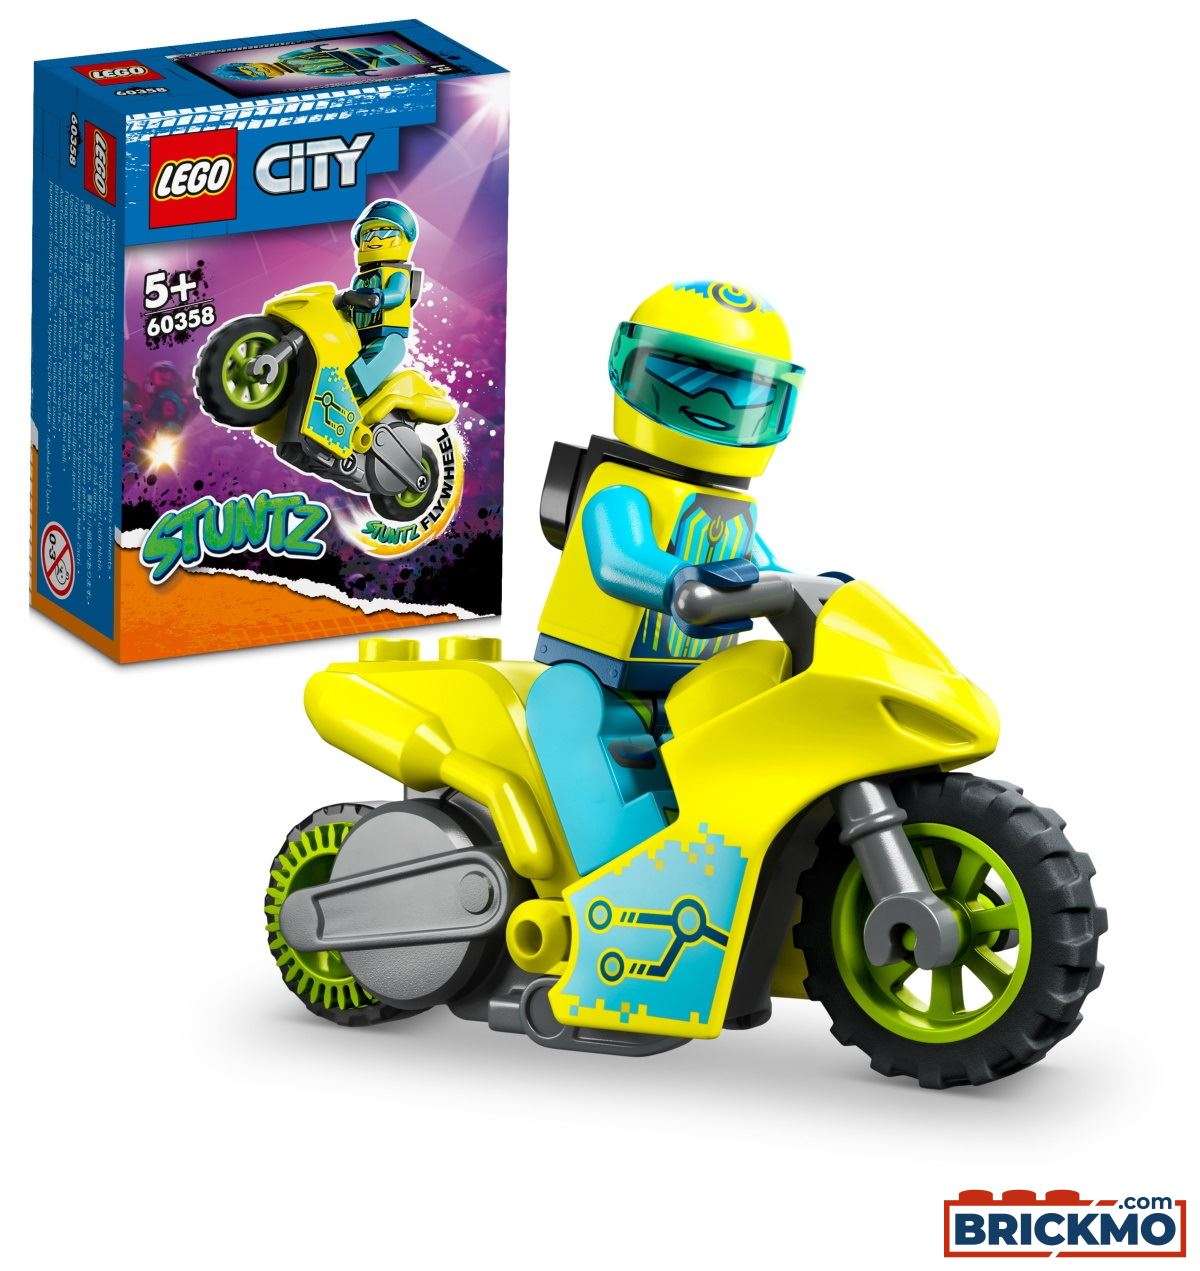 LEGO City 60358 Cyber-Stuntbike 60358